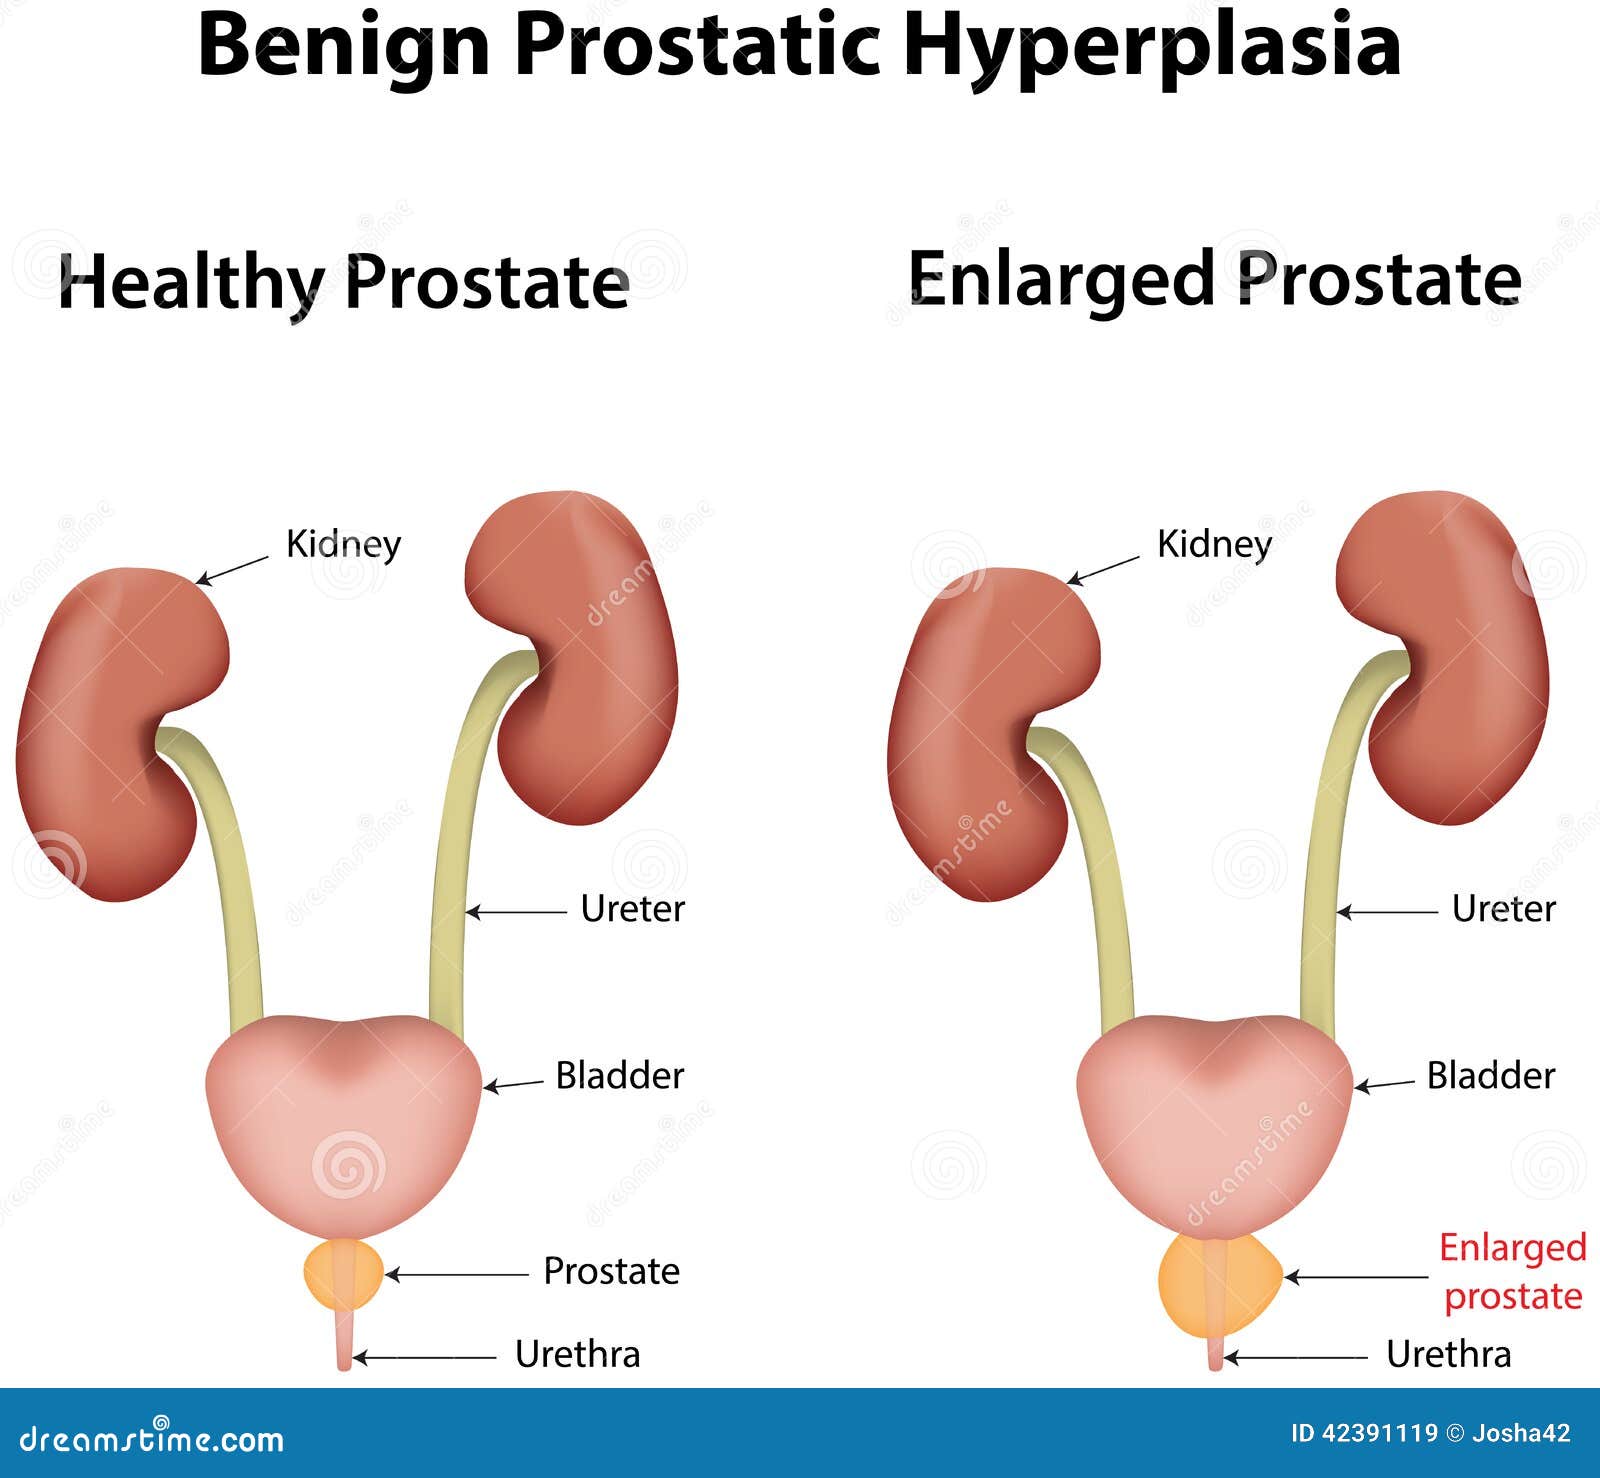 prostate equity hyperplasia